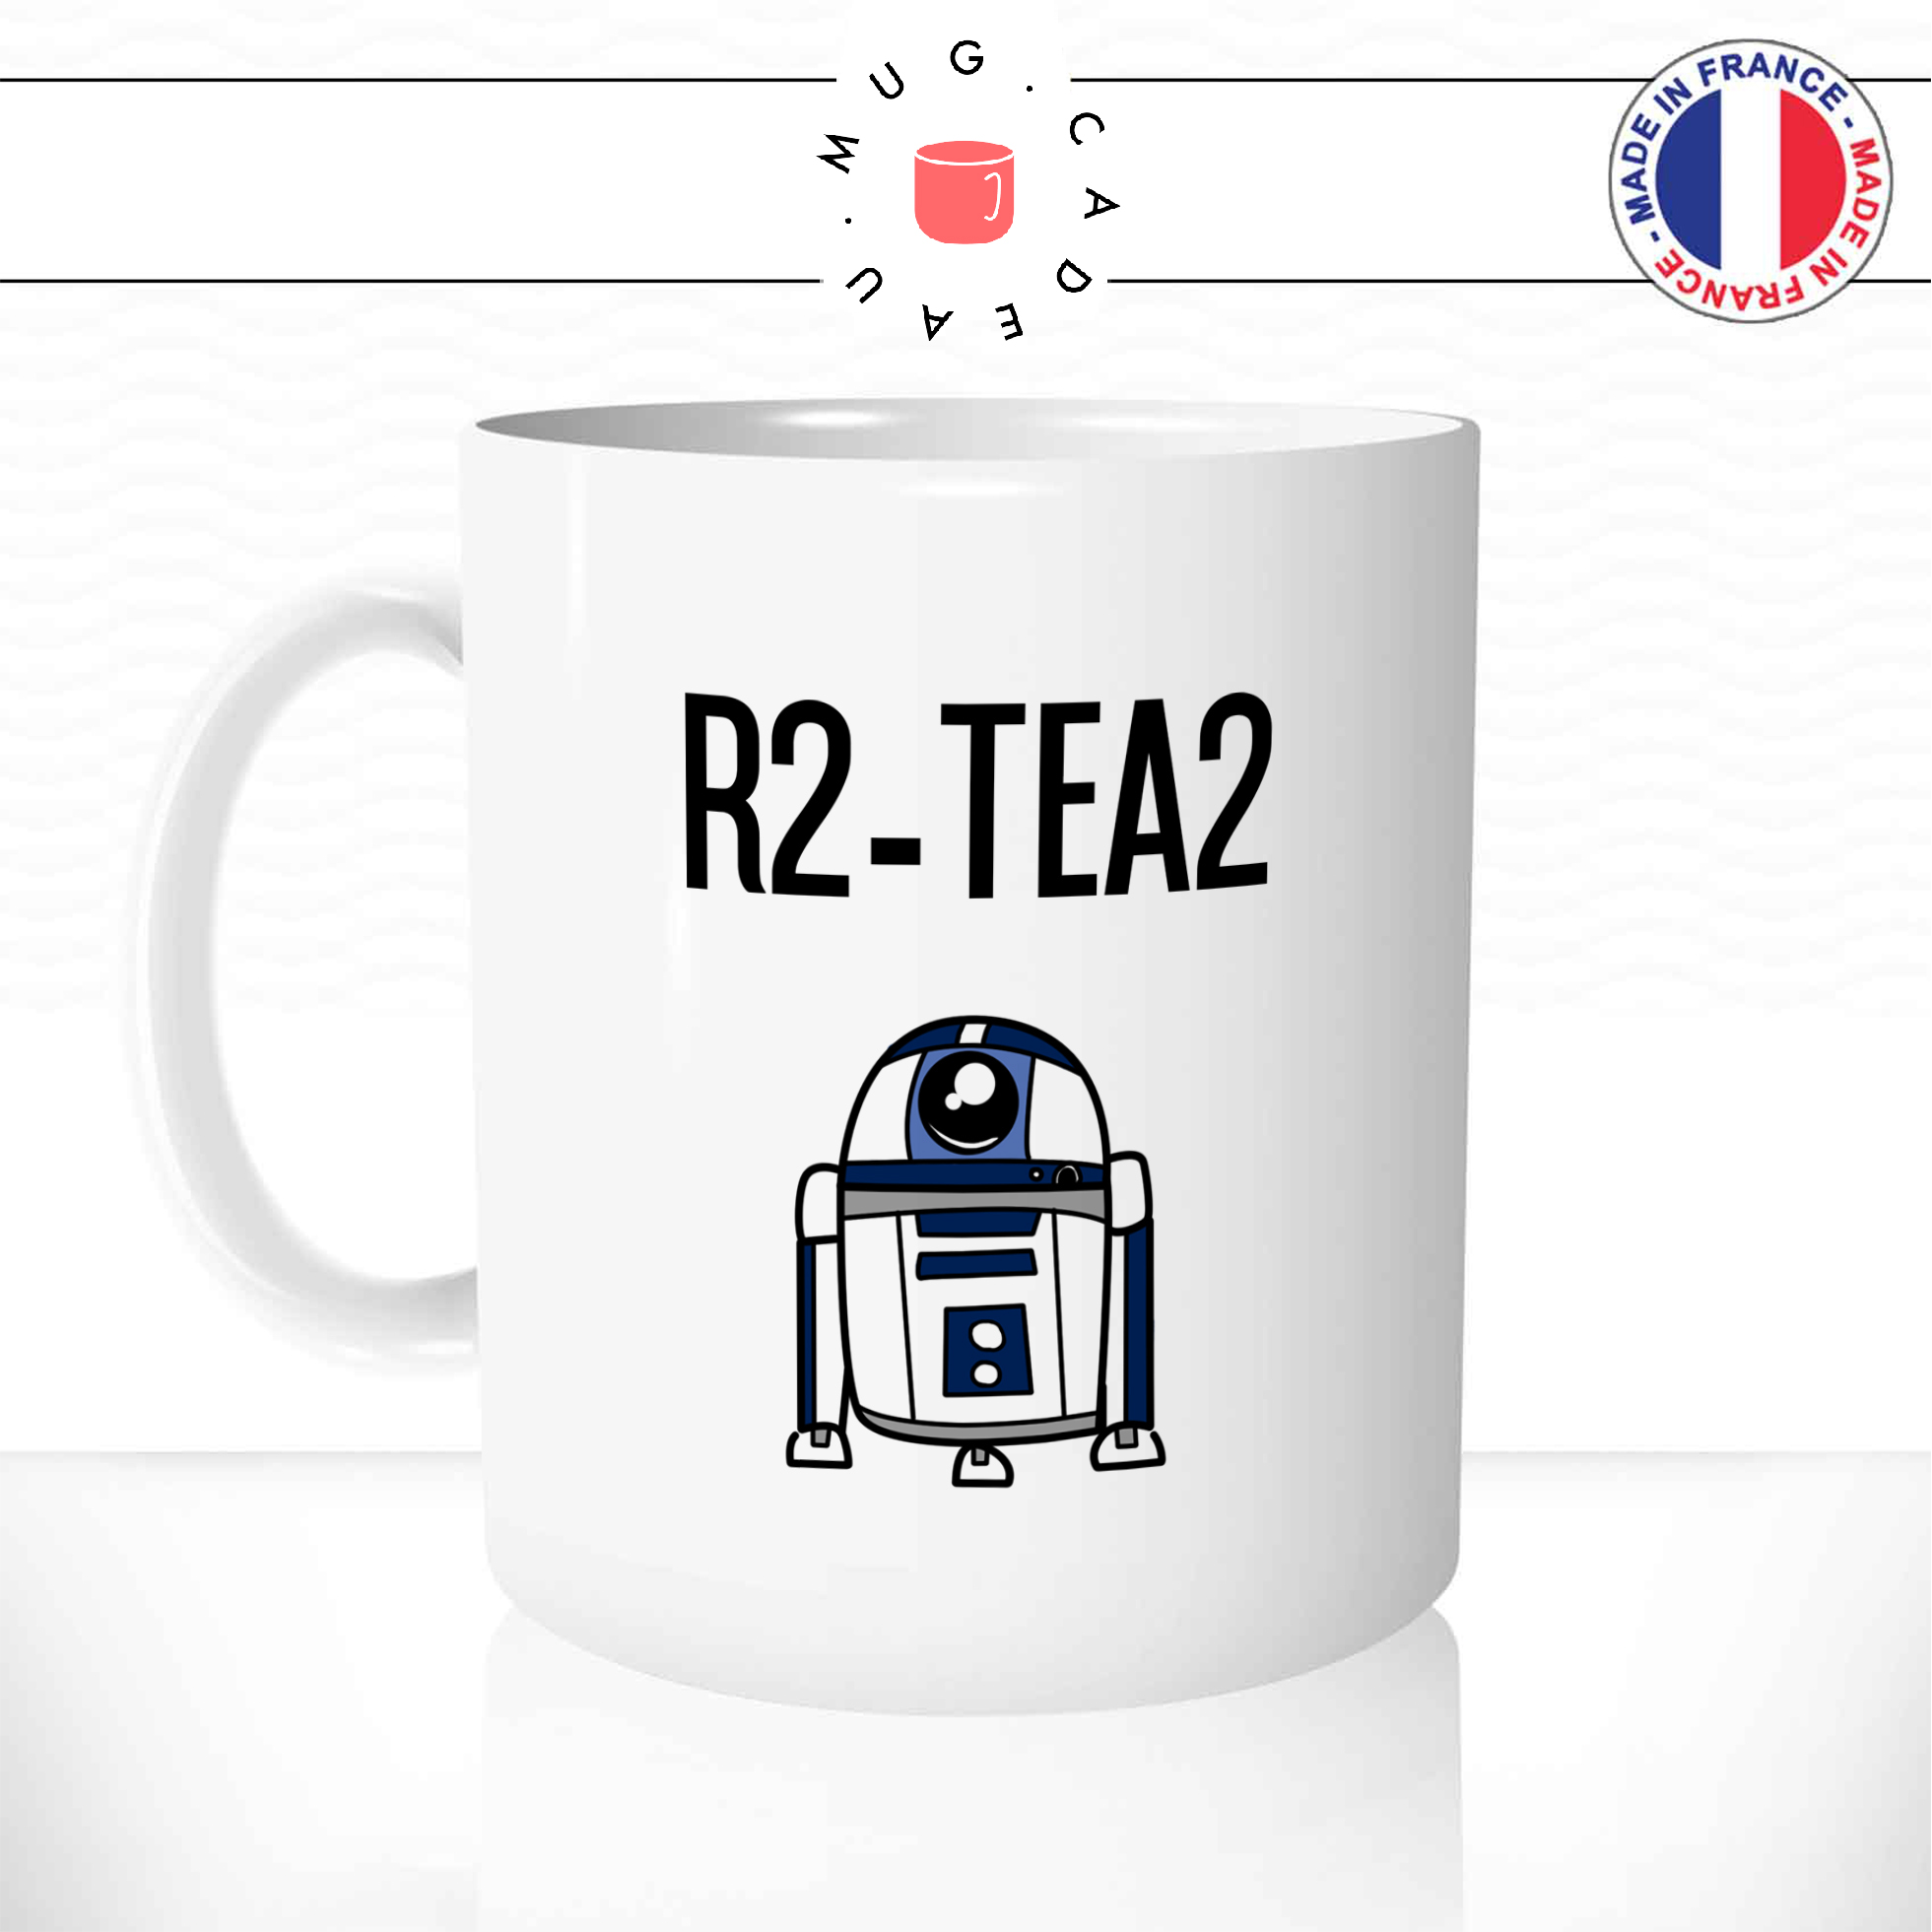 Mug R2 Tea2